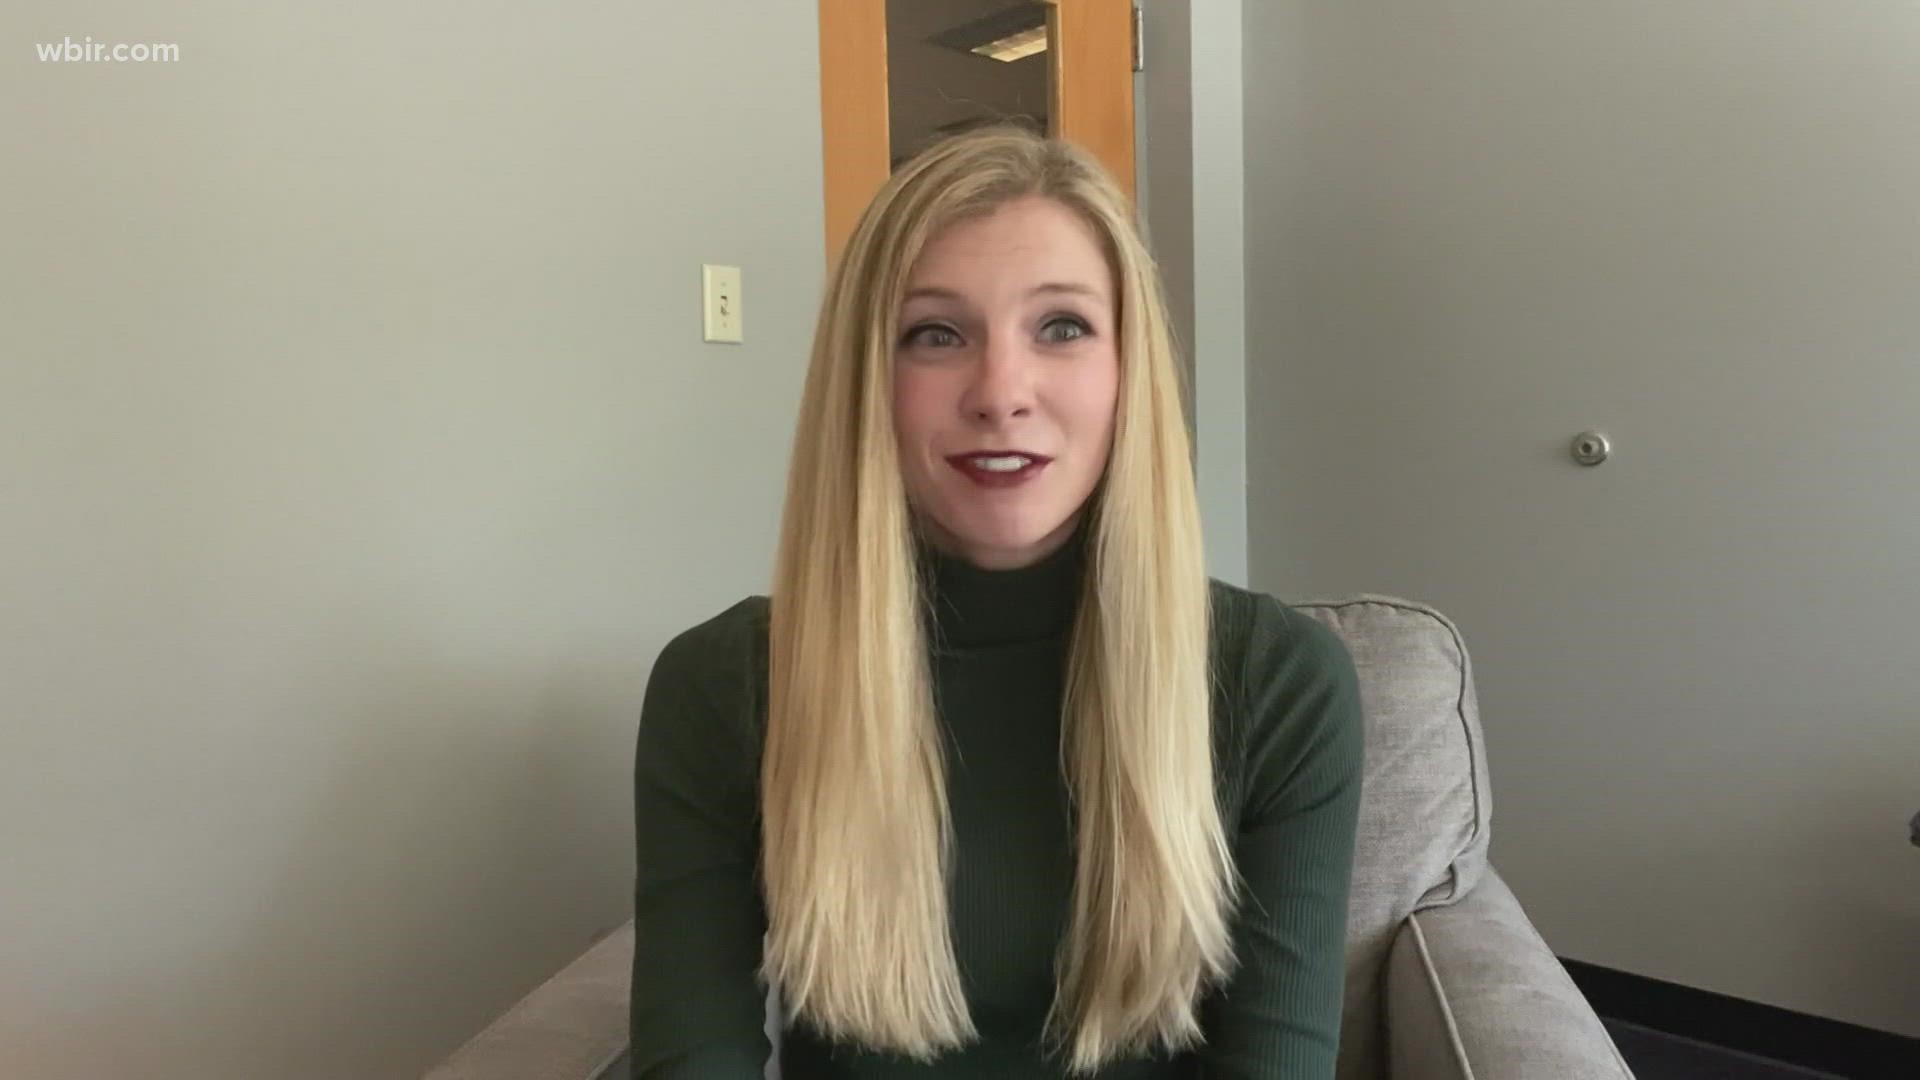 WBIR digital storyteller Elizabeth Sims shares what she is thankful for this Thanksgiving.